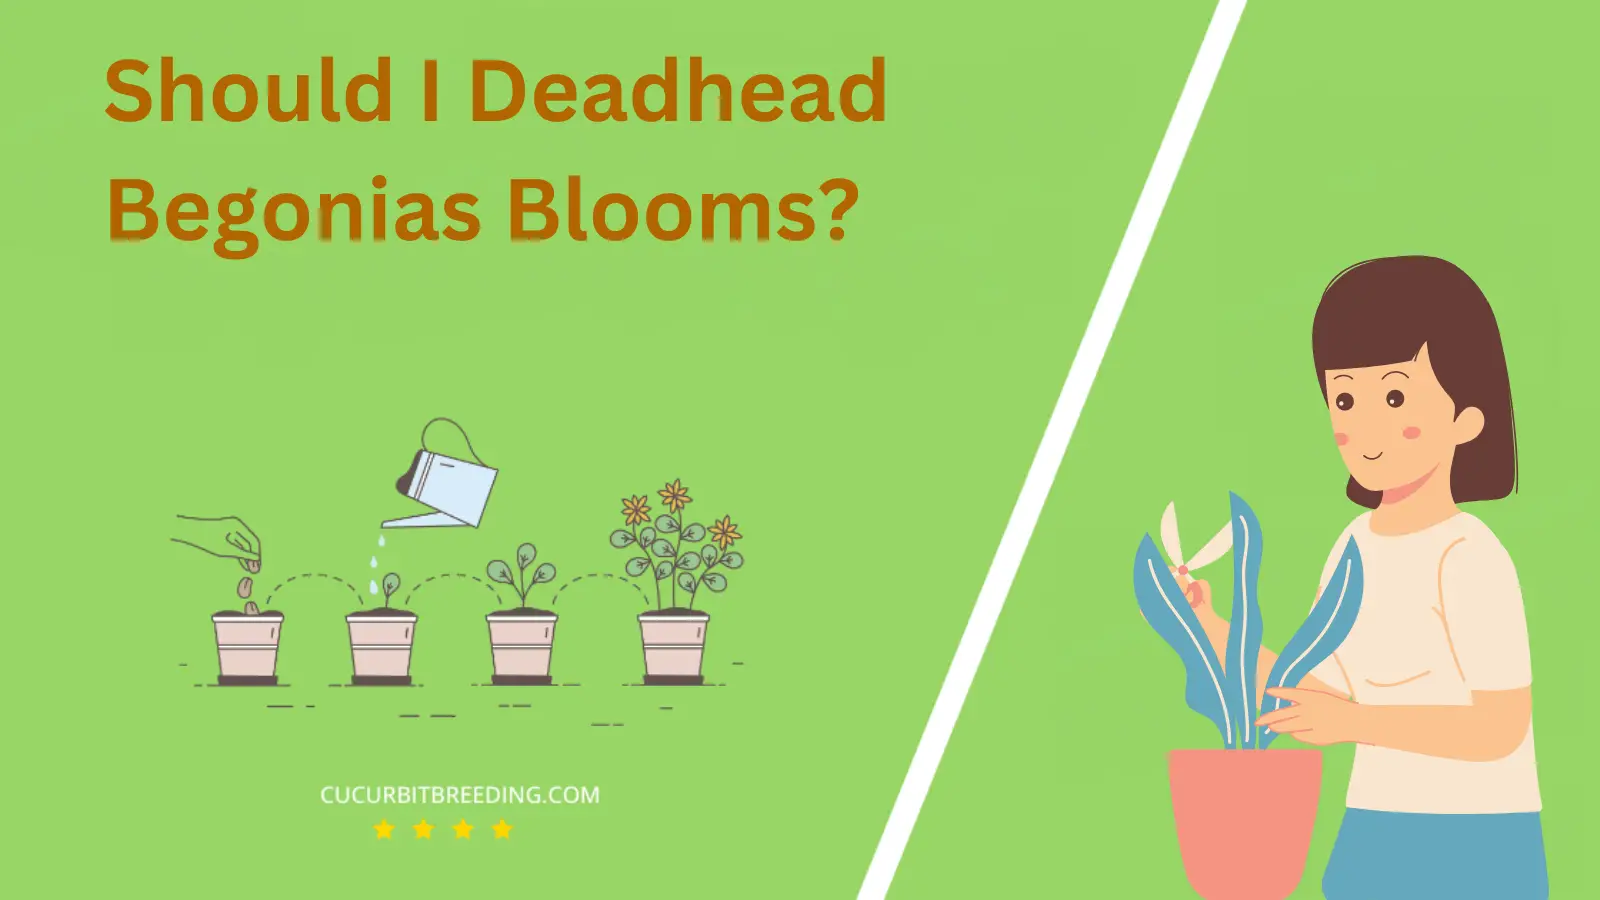 Should I Deadhead Begonias Blooms?